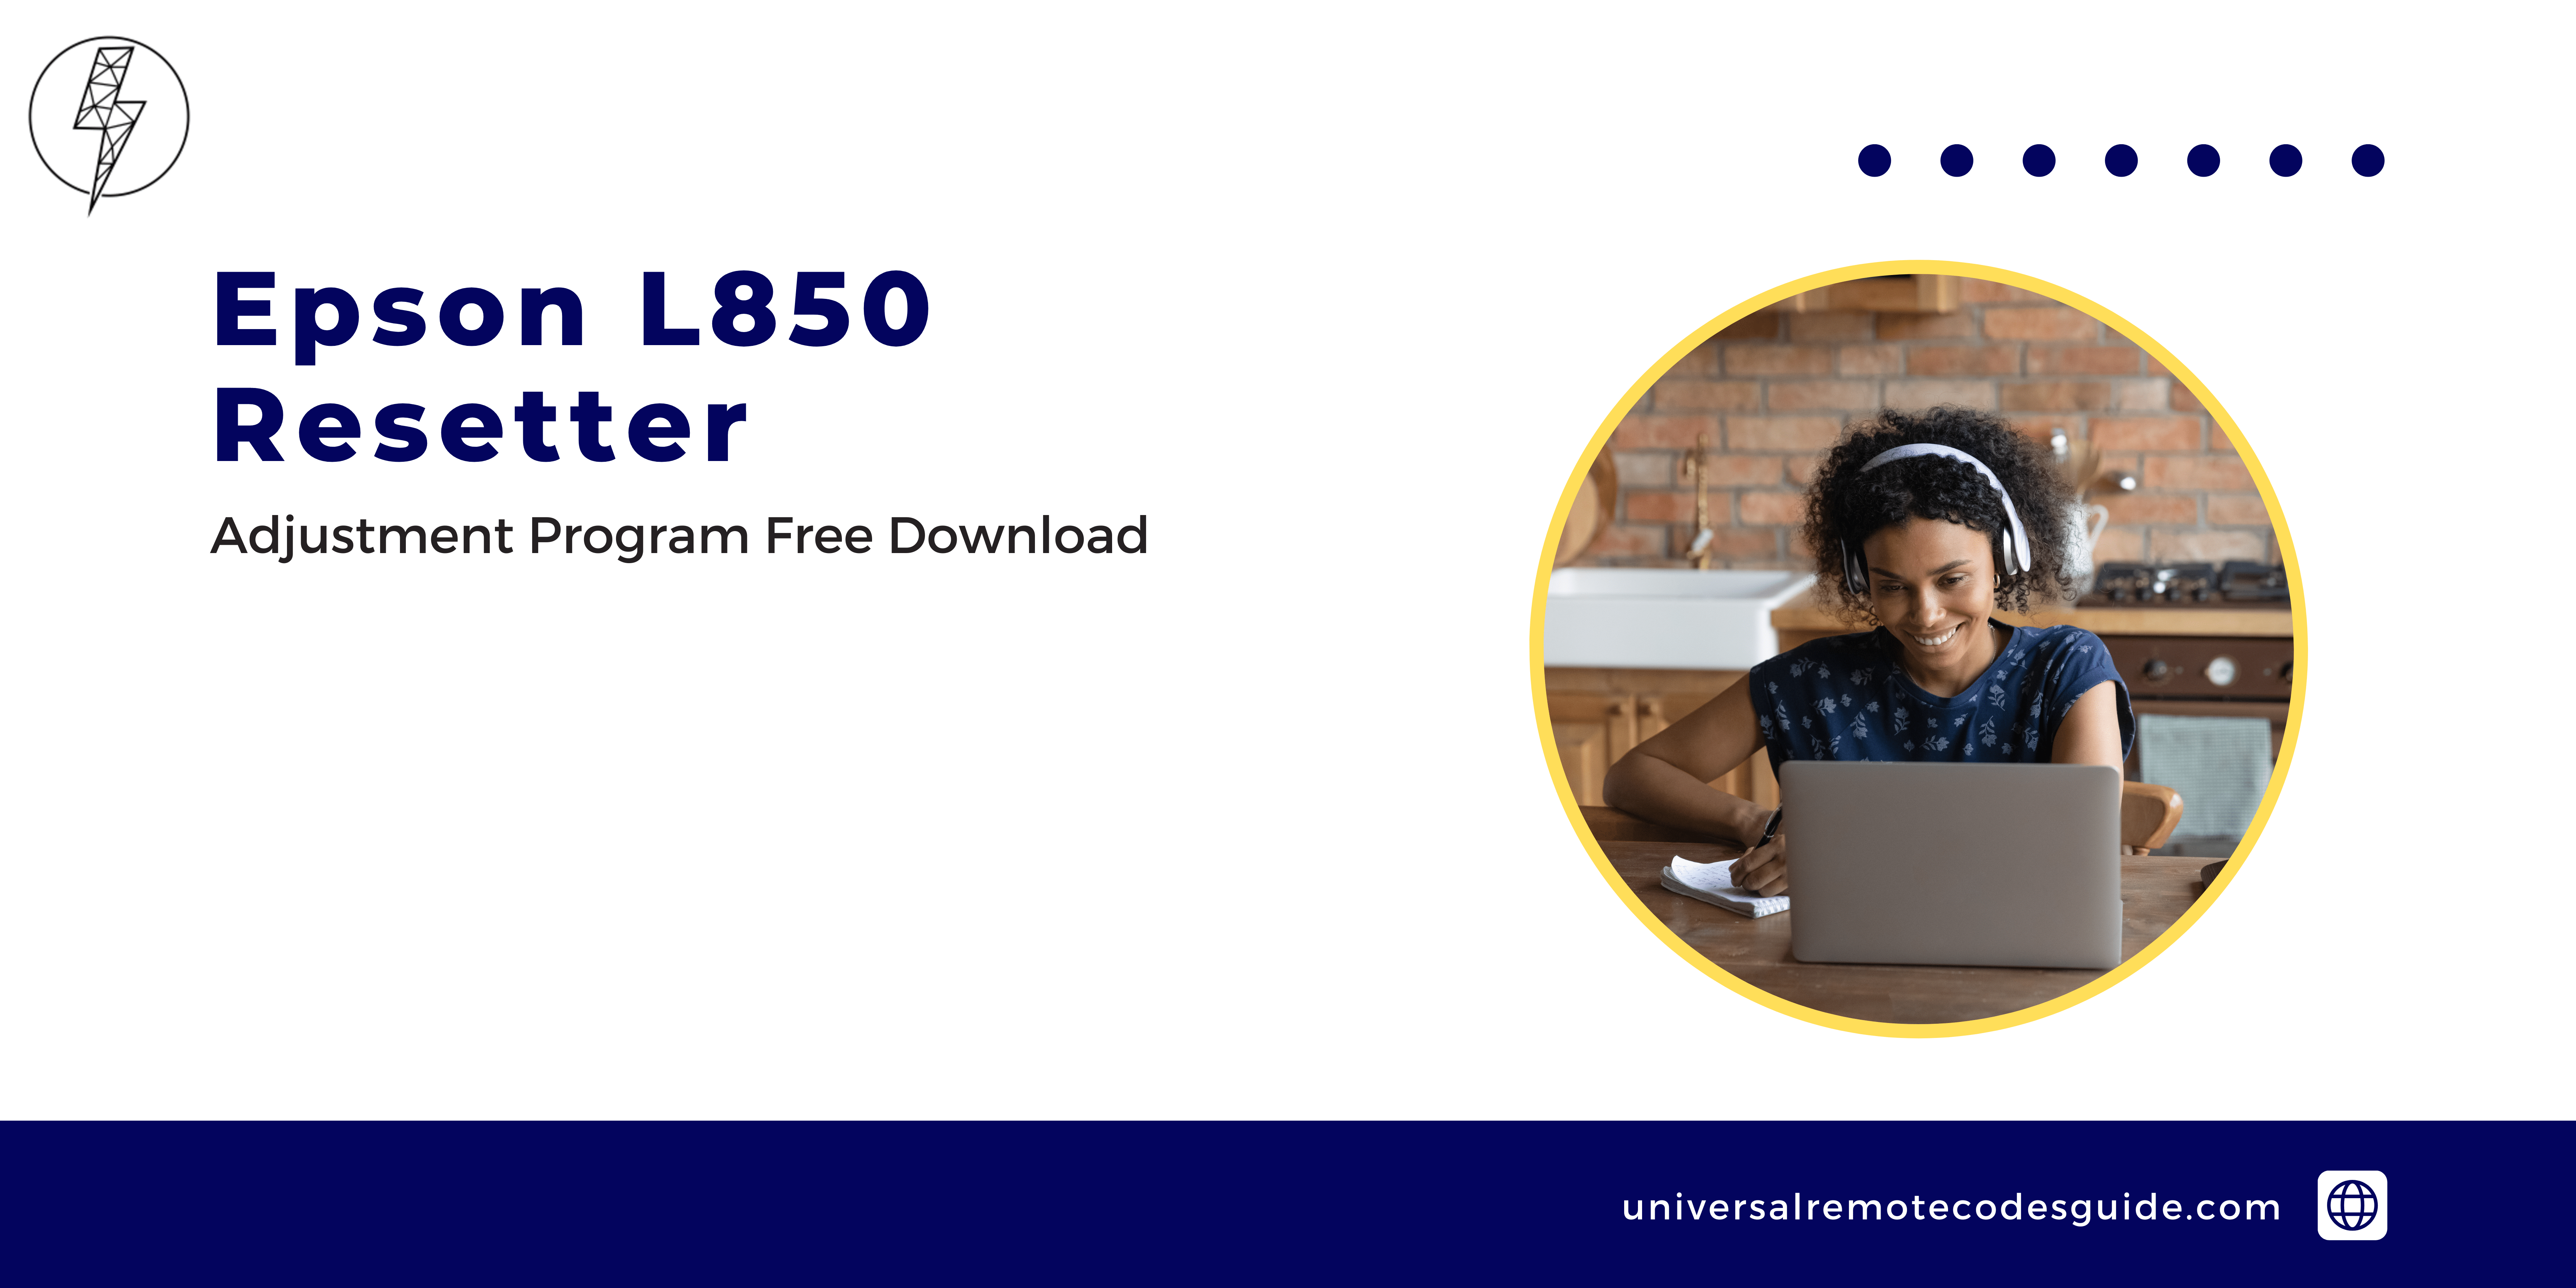 Epson L850 Resetter Download and adjustment program